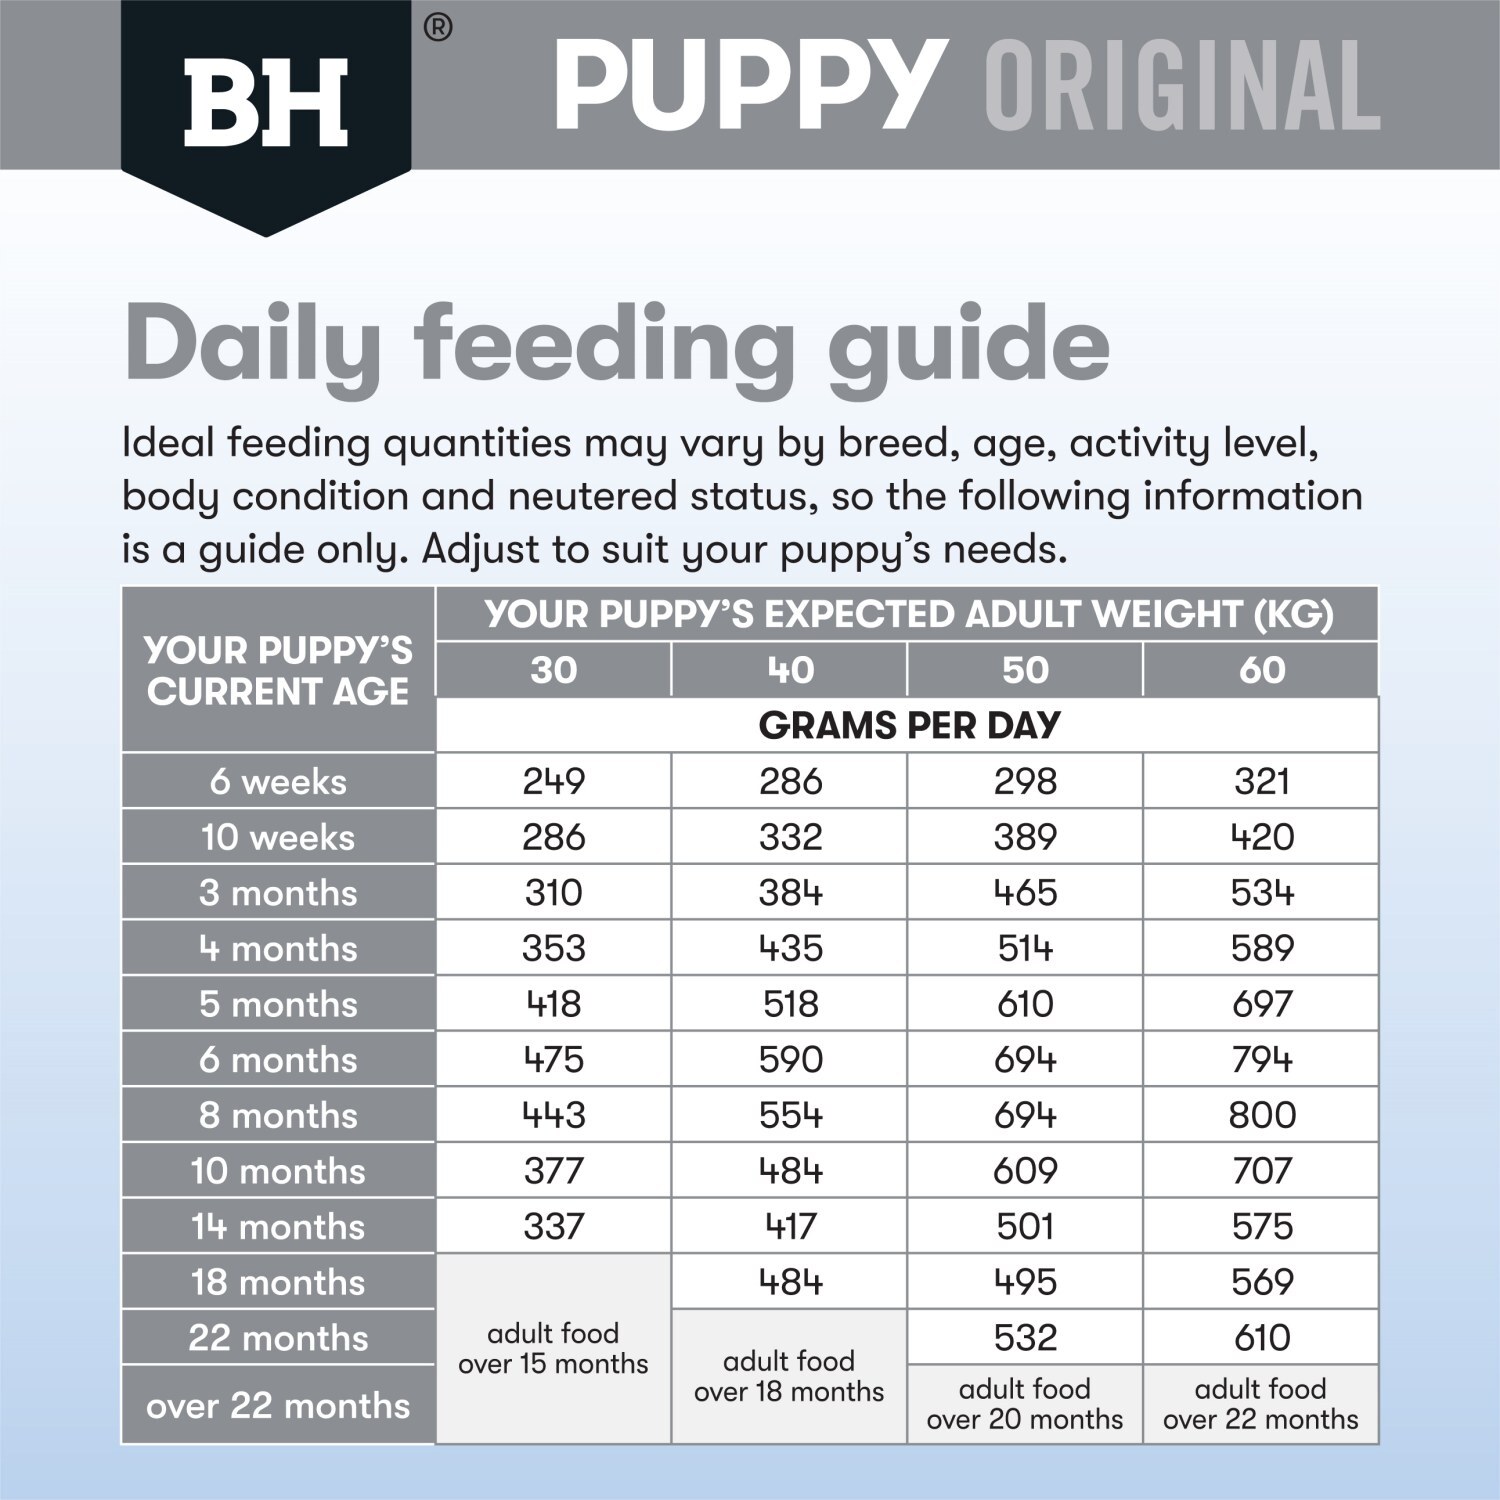 Black Hawk Original Chicken & Rice Puppy Dry Dog Food - Large Breeds image 1